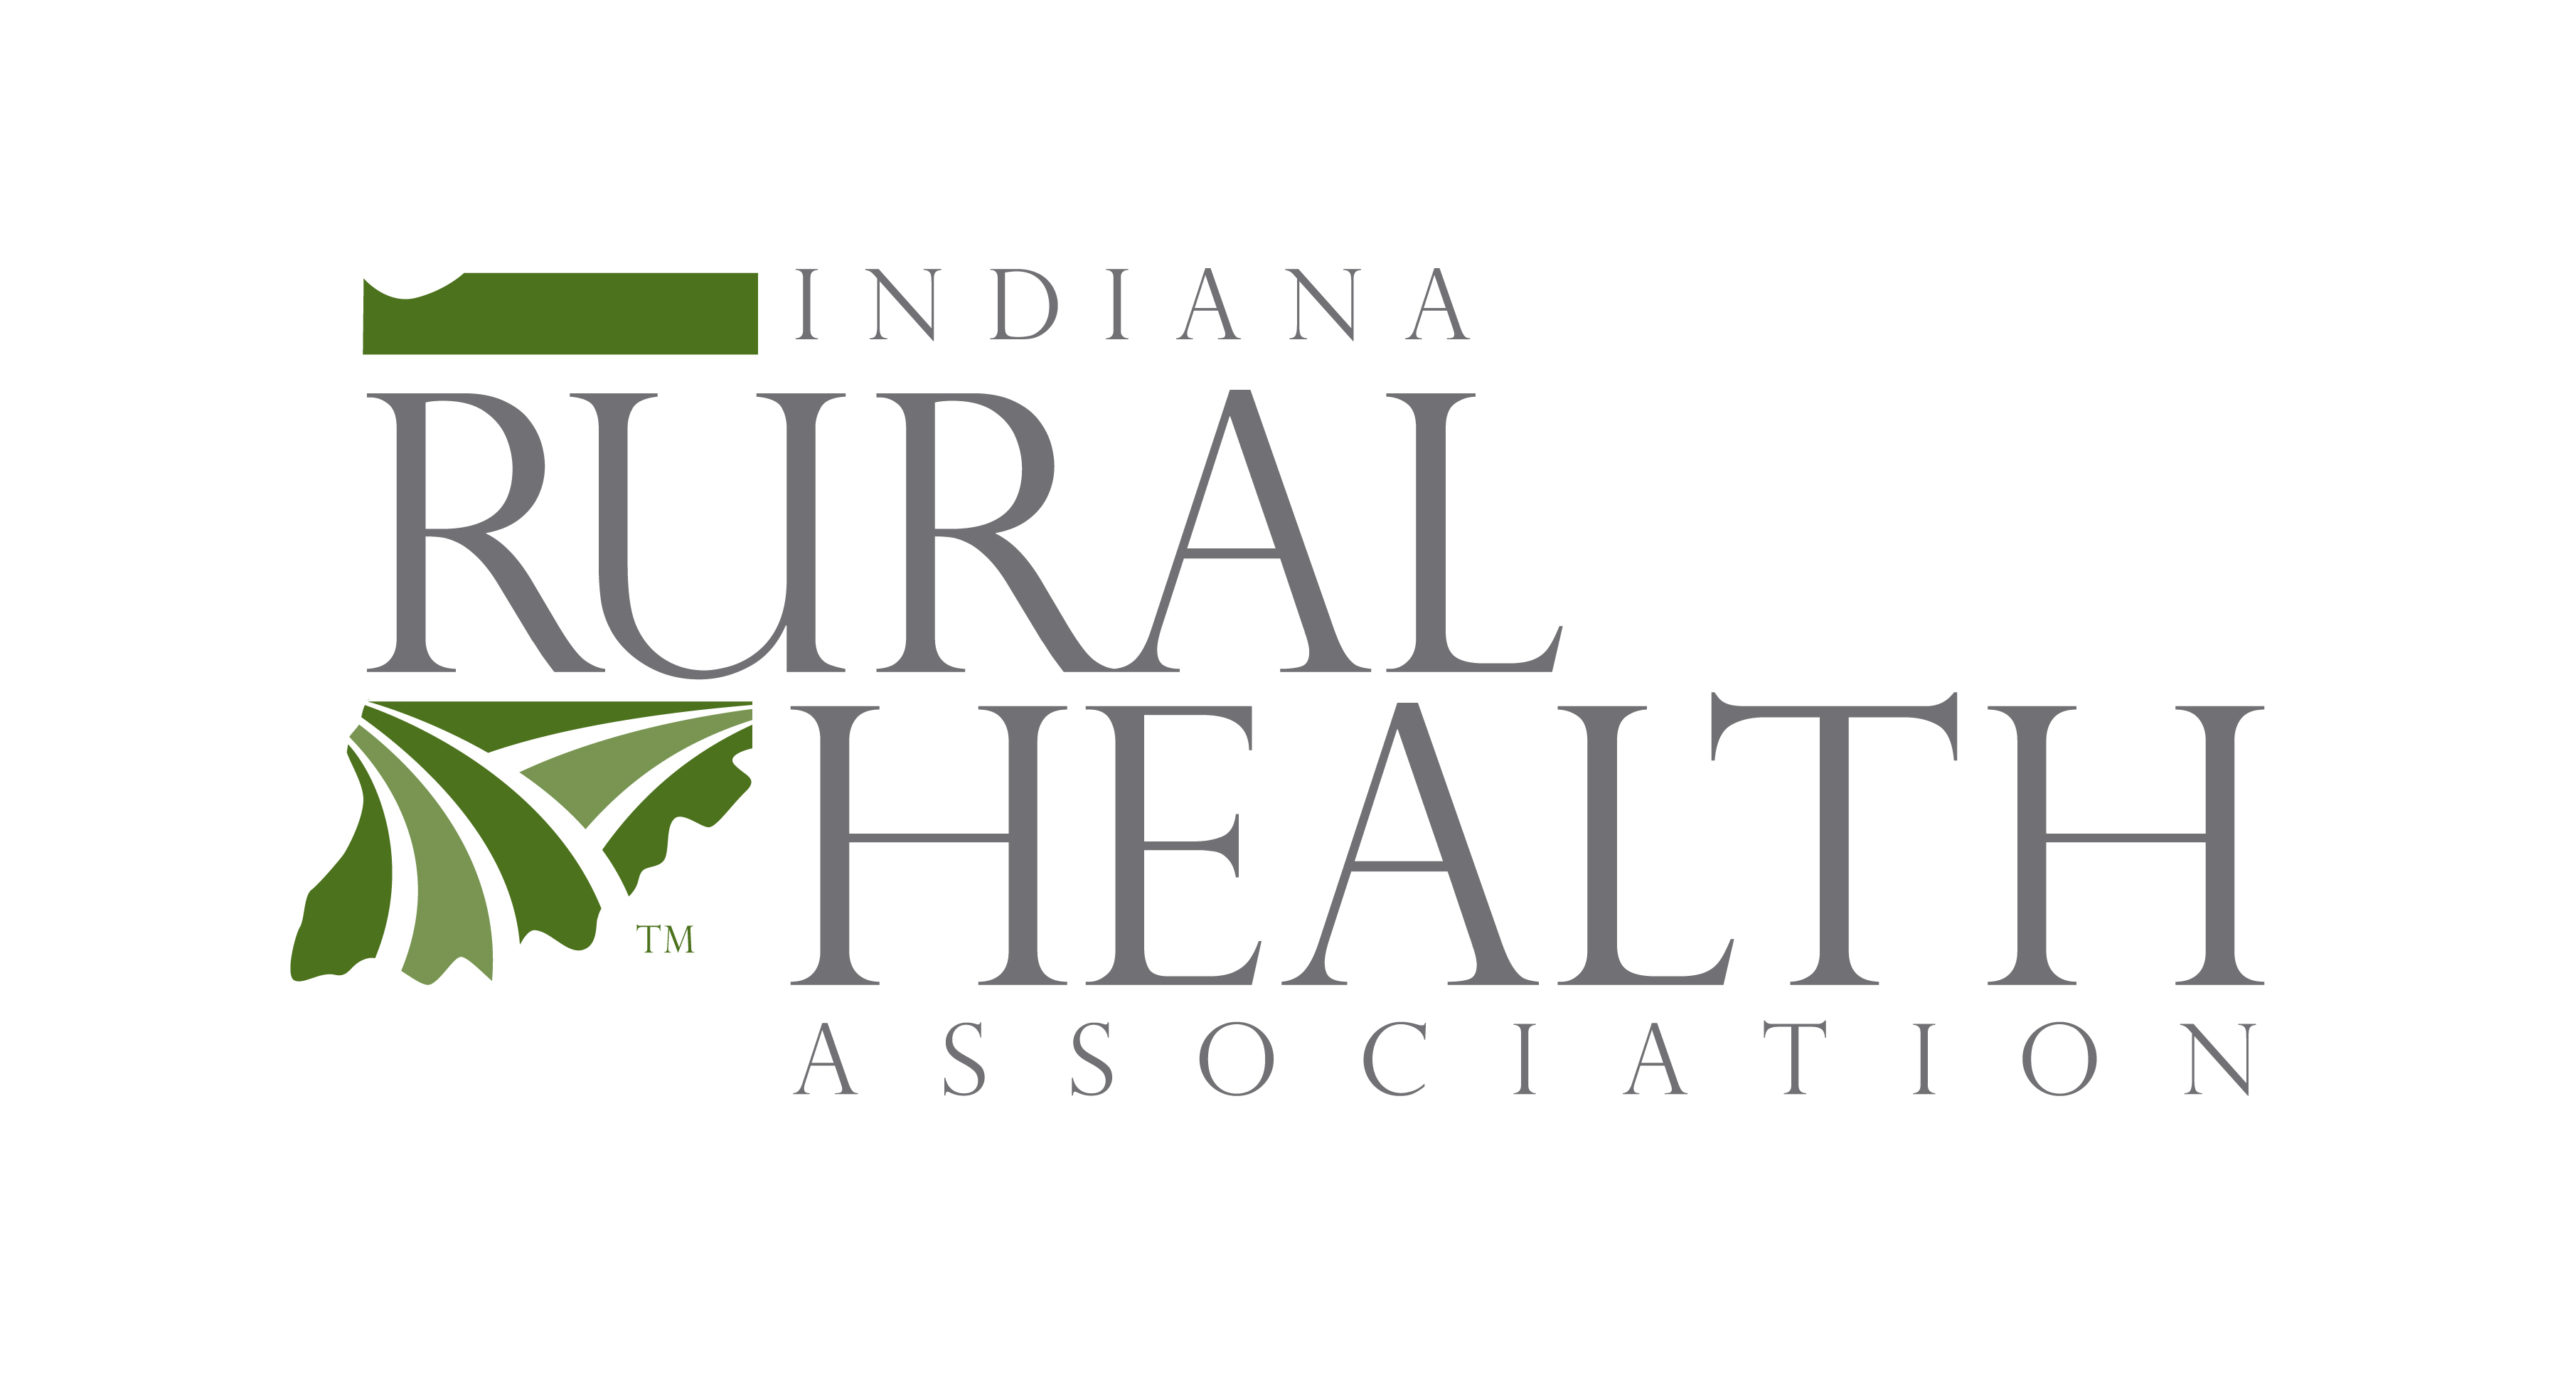 Indiana Rural Healthcare Association